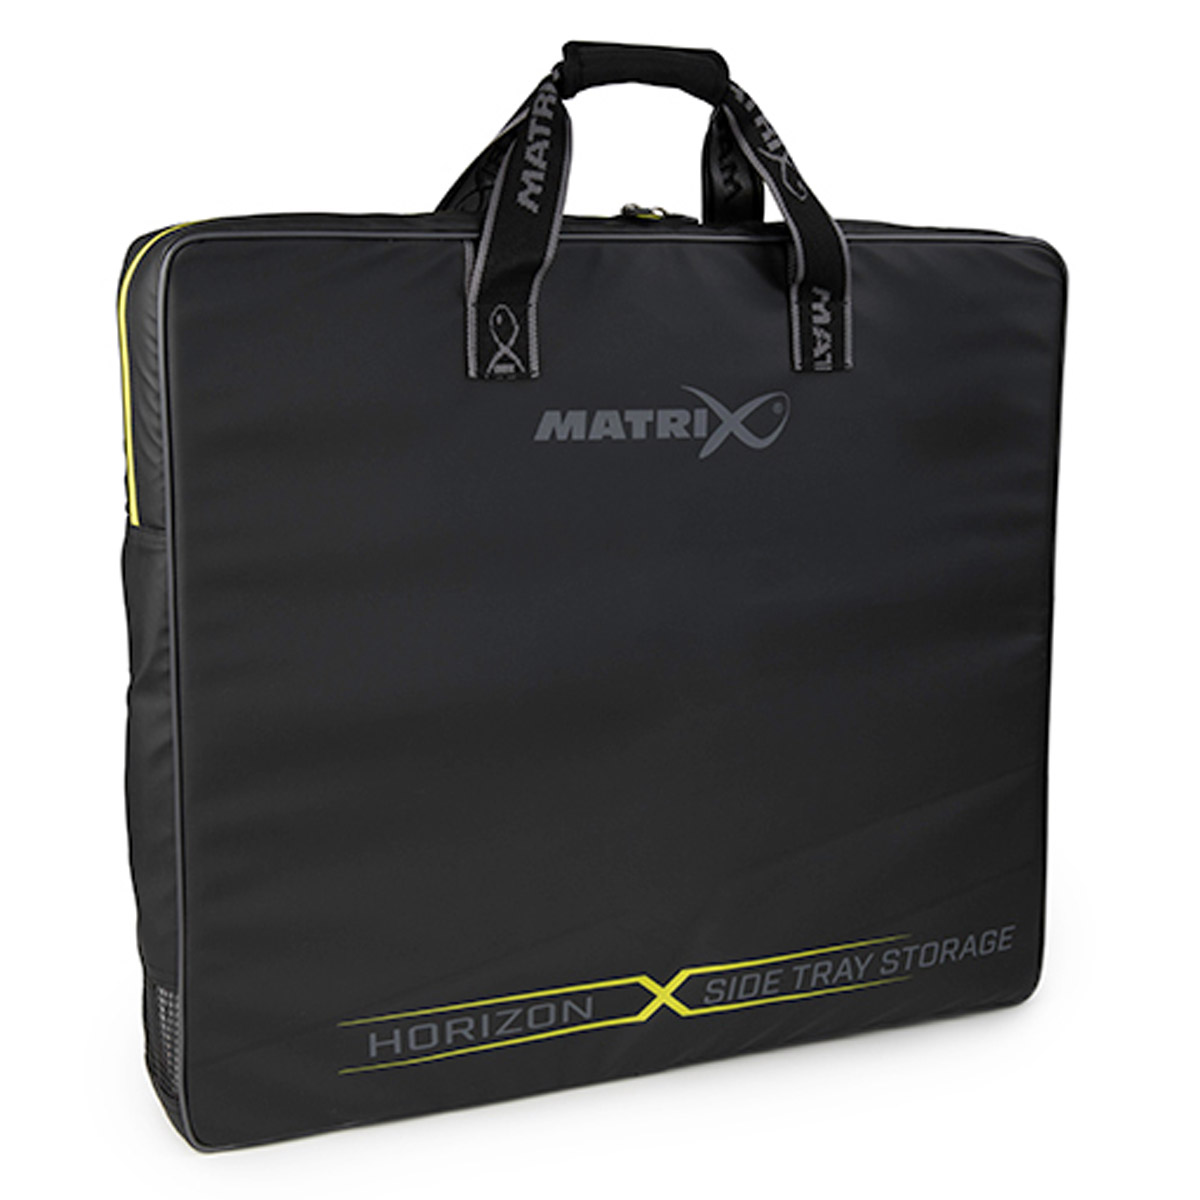 Fox Matrix Horizon X Side Tray Storage